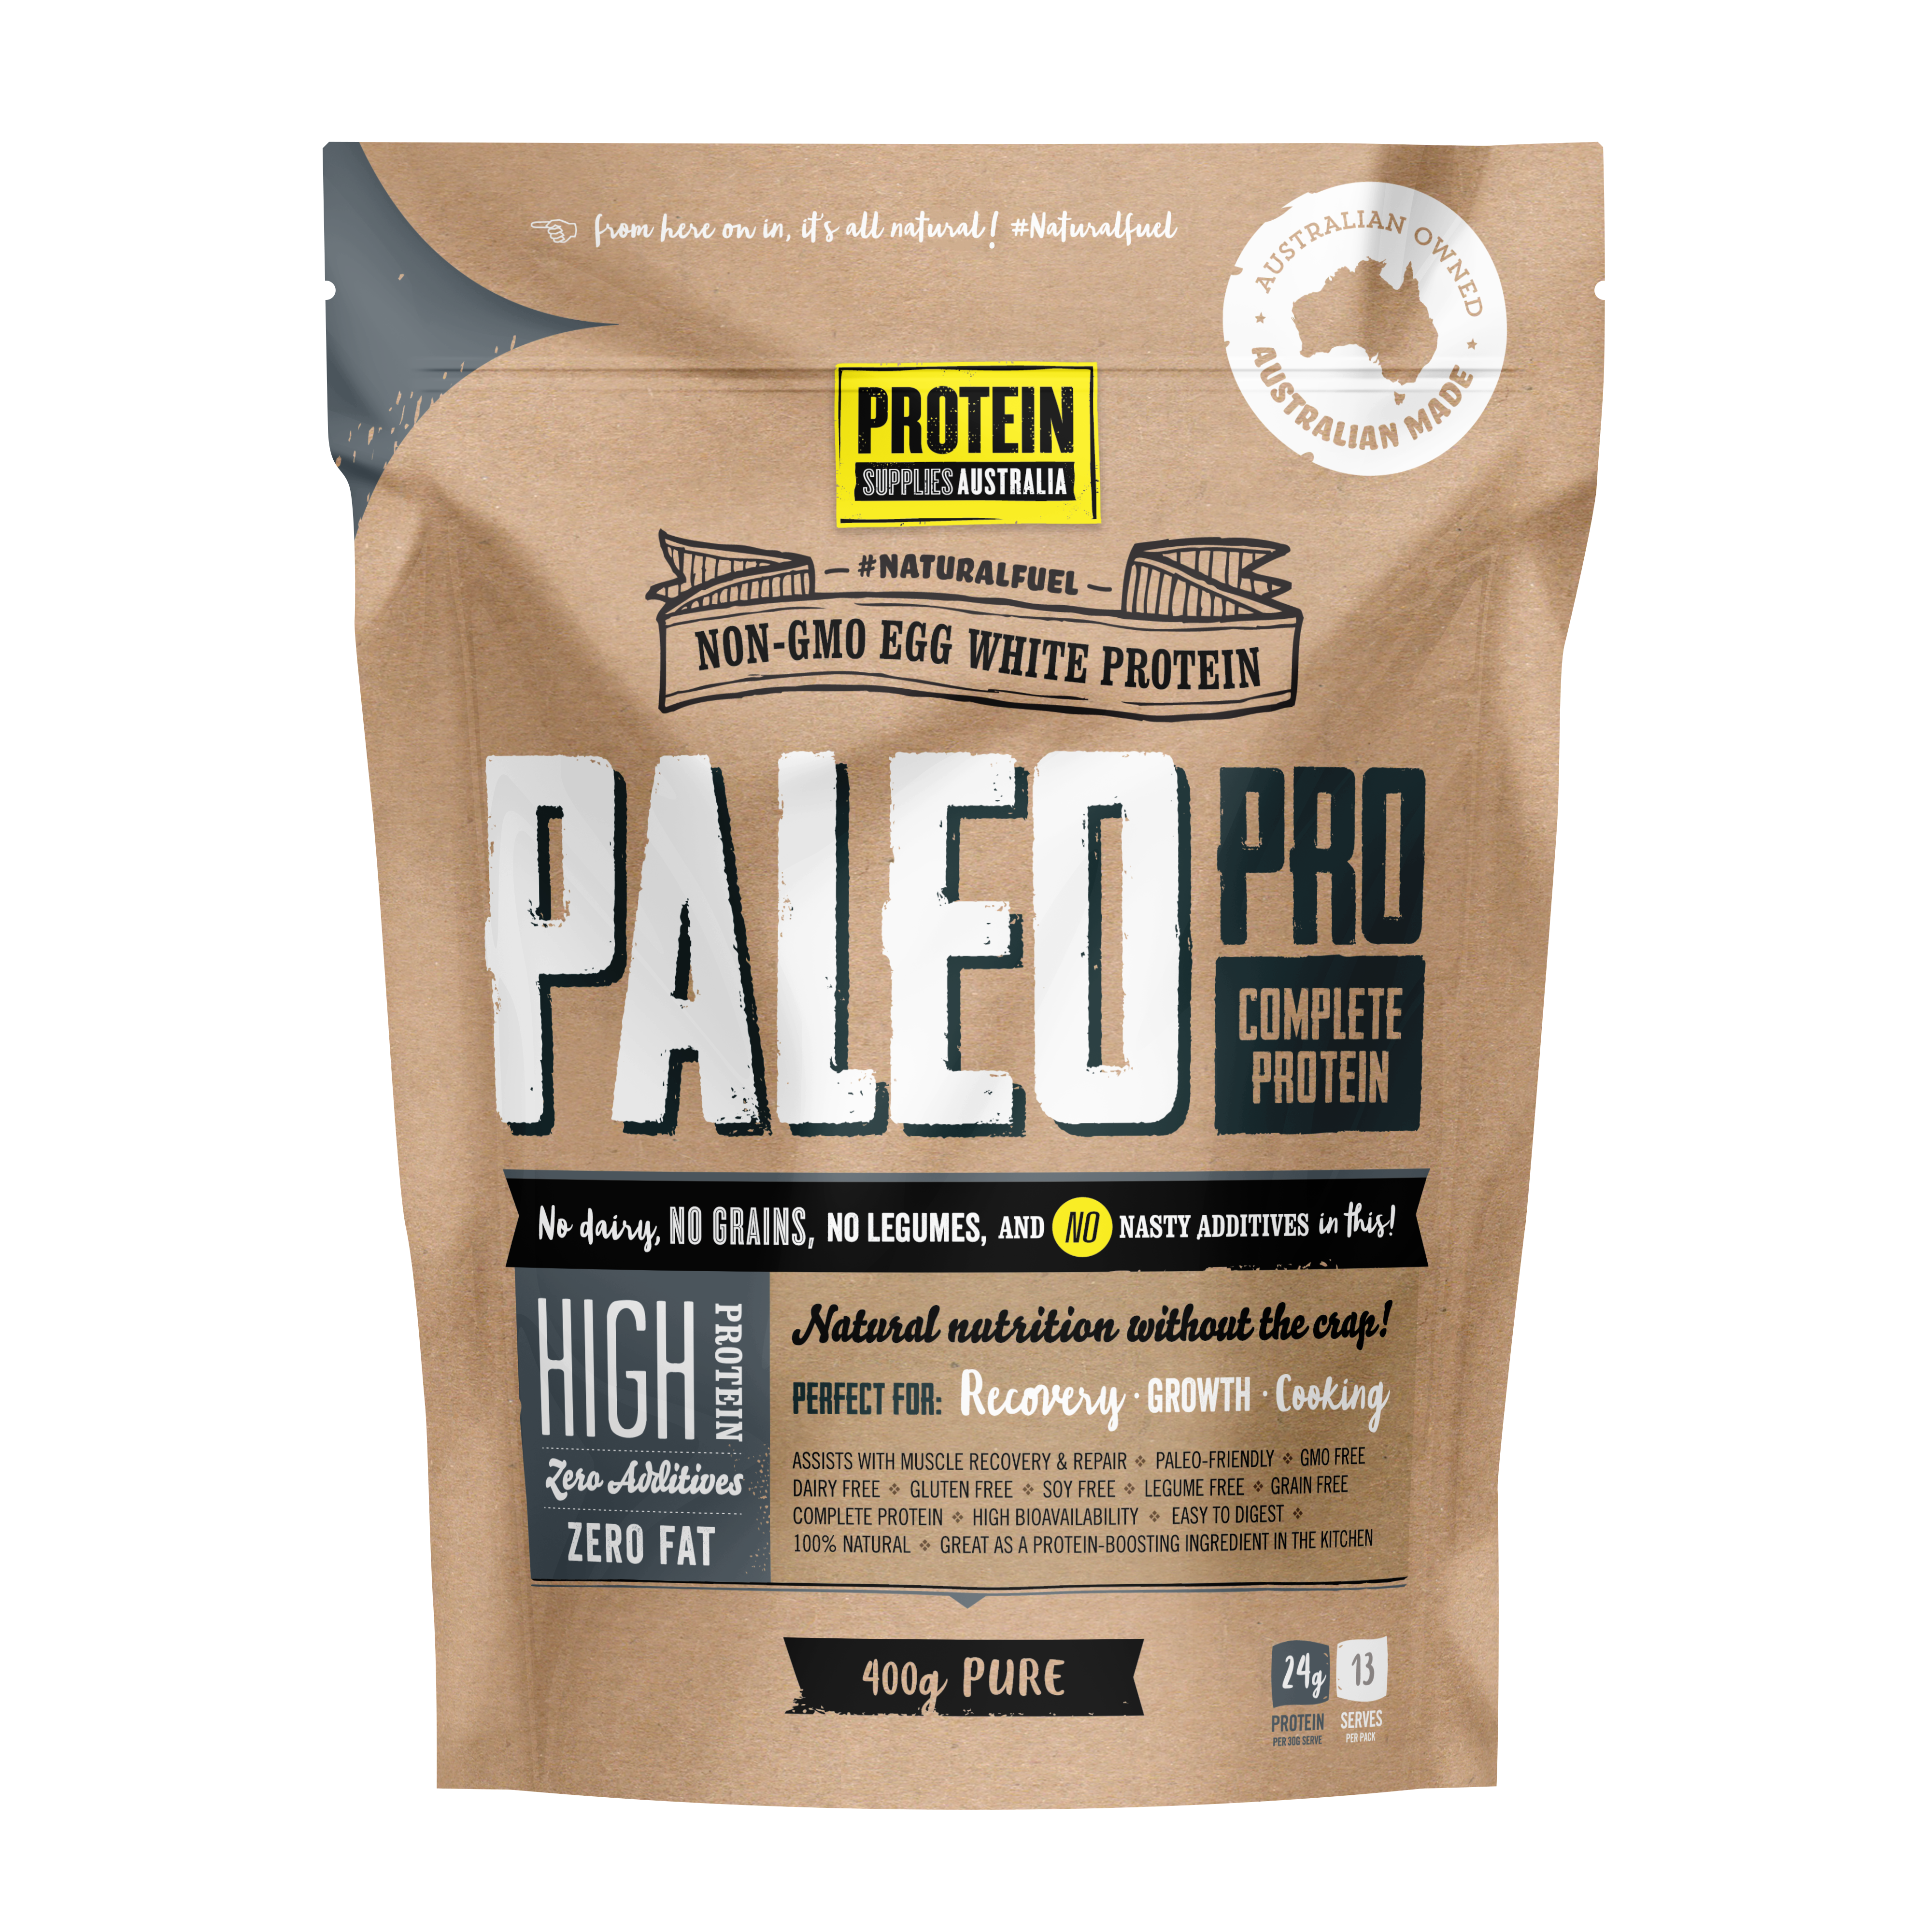 protein supplies aust. paleopro (egg white protein) pure 400g